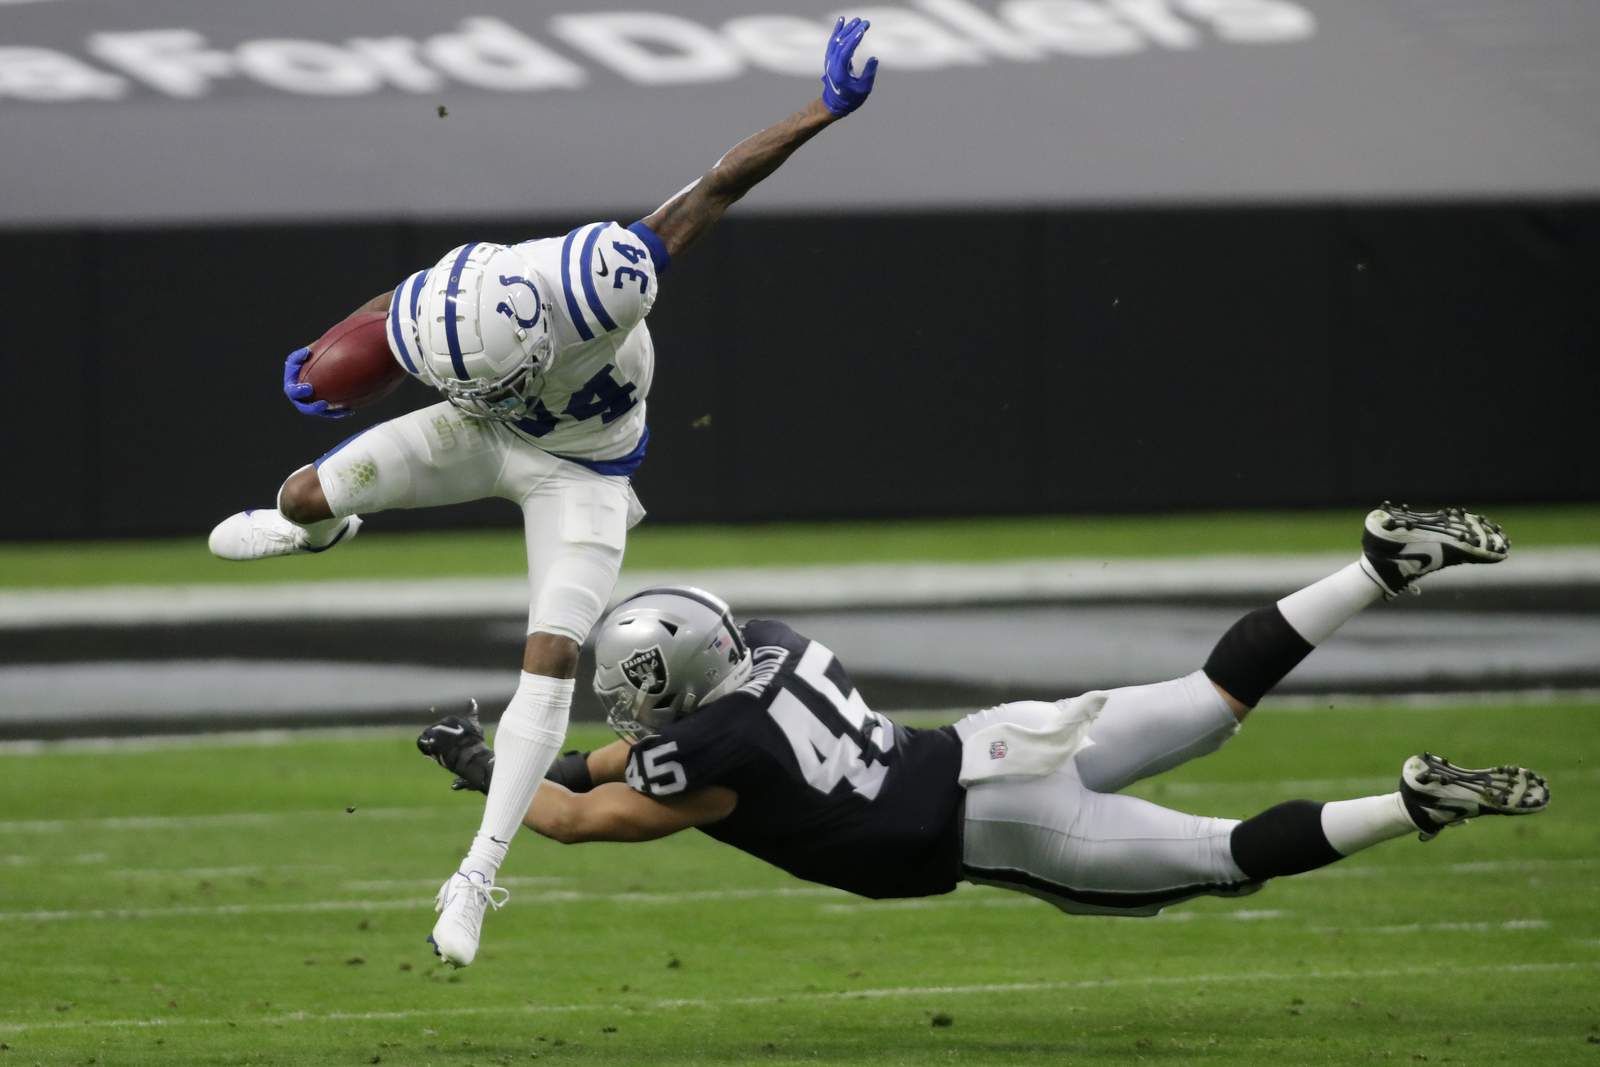 Raiders stun Patriots with improbable walk-off defensive touchdown